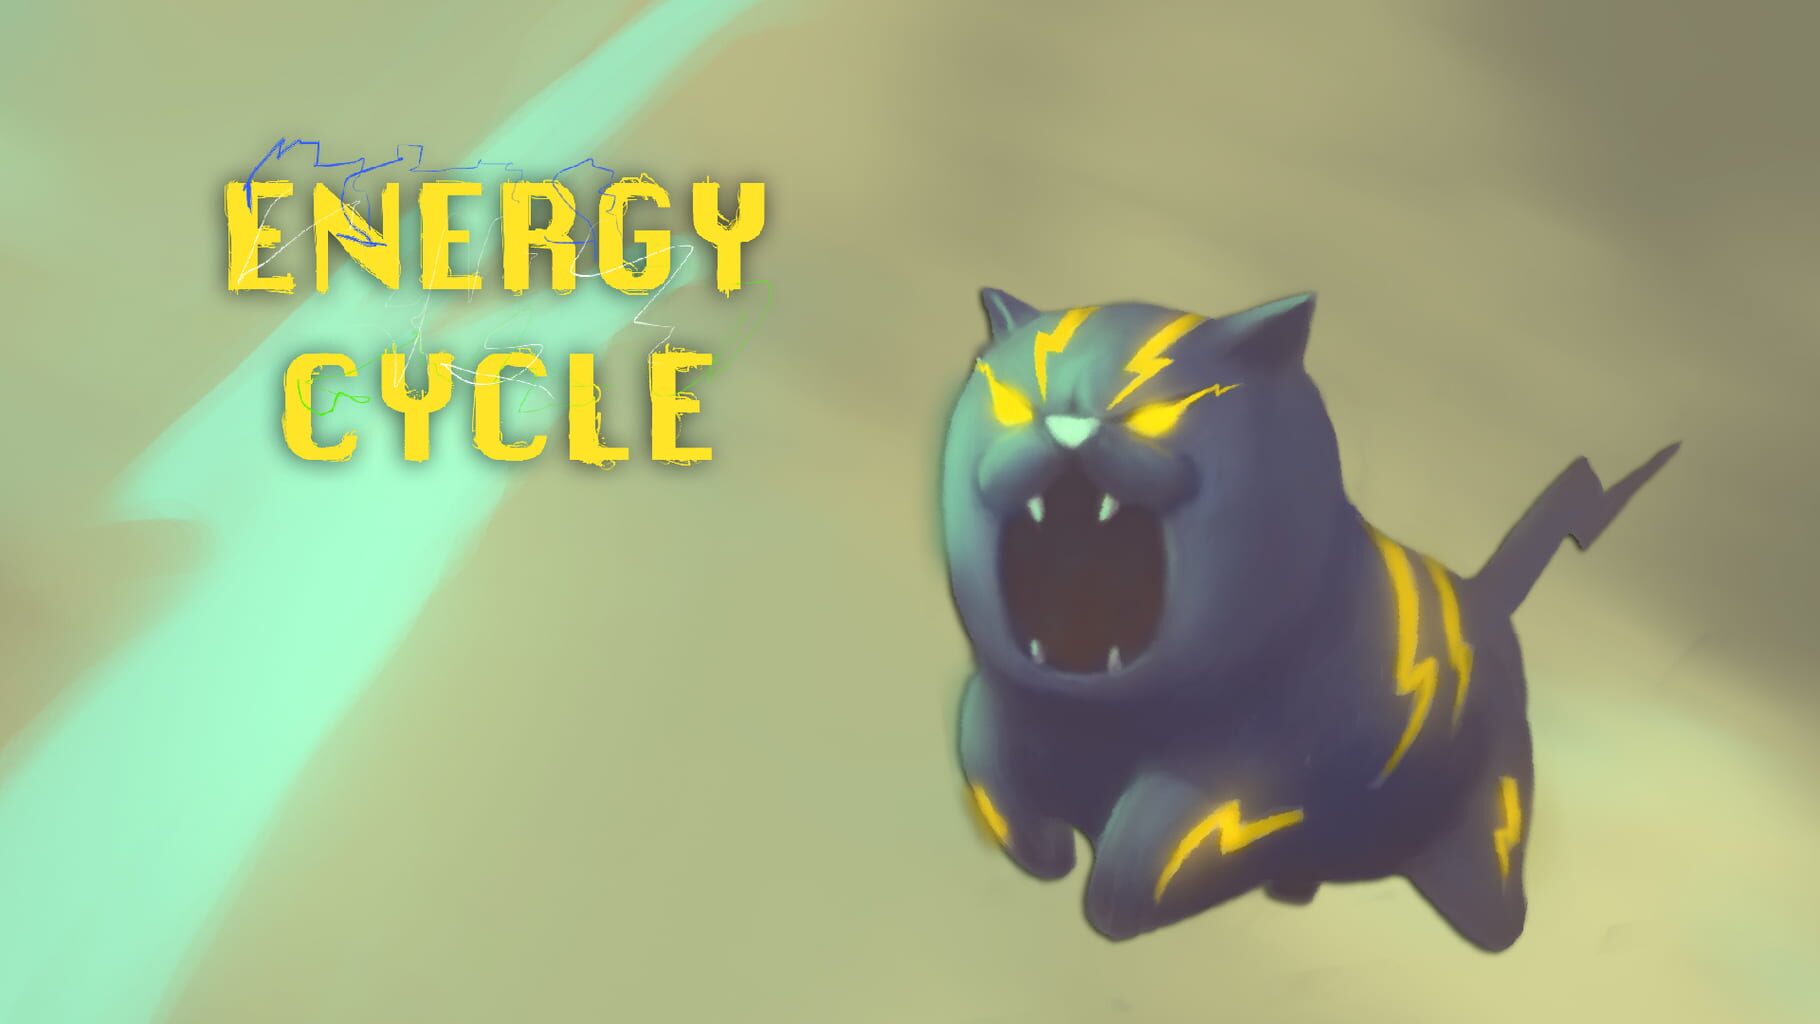 Energy Cycle artwork